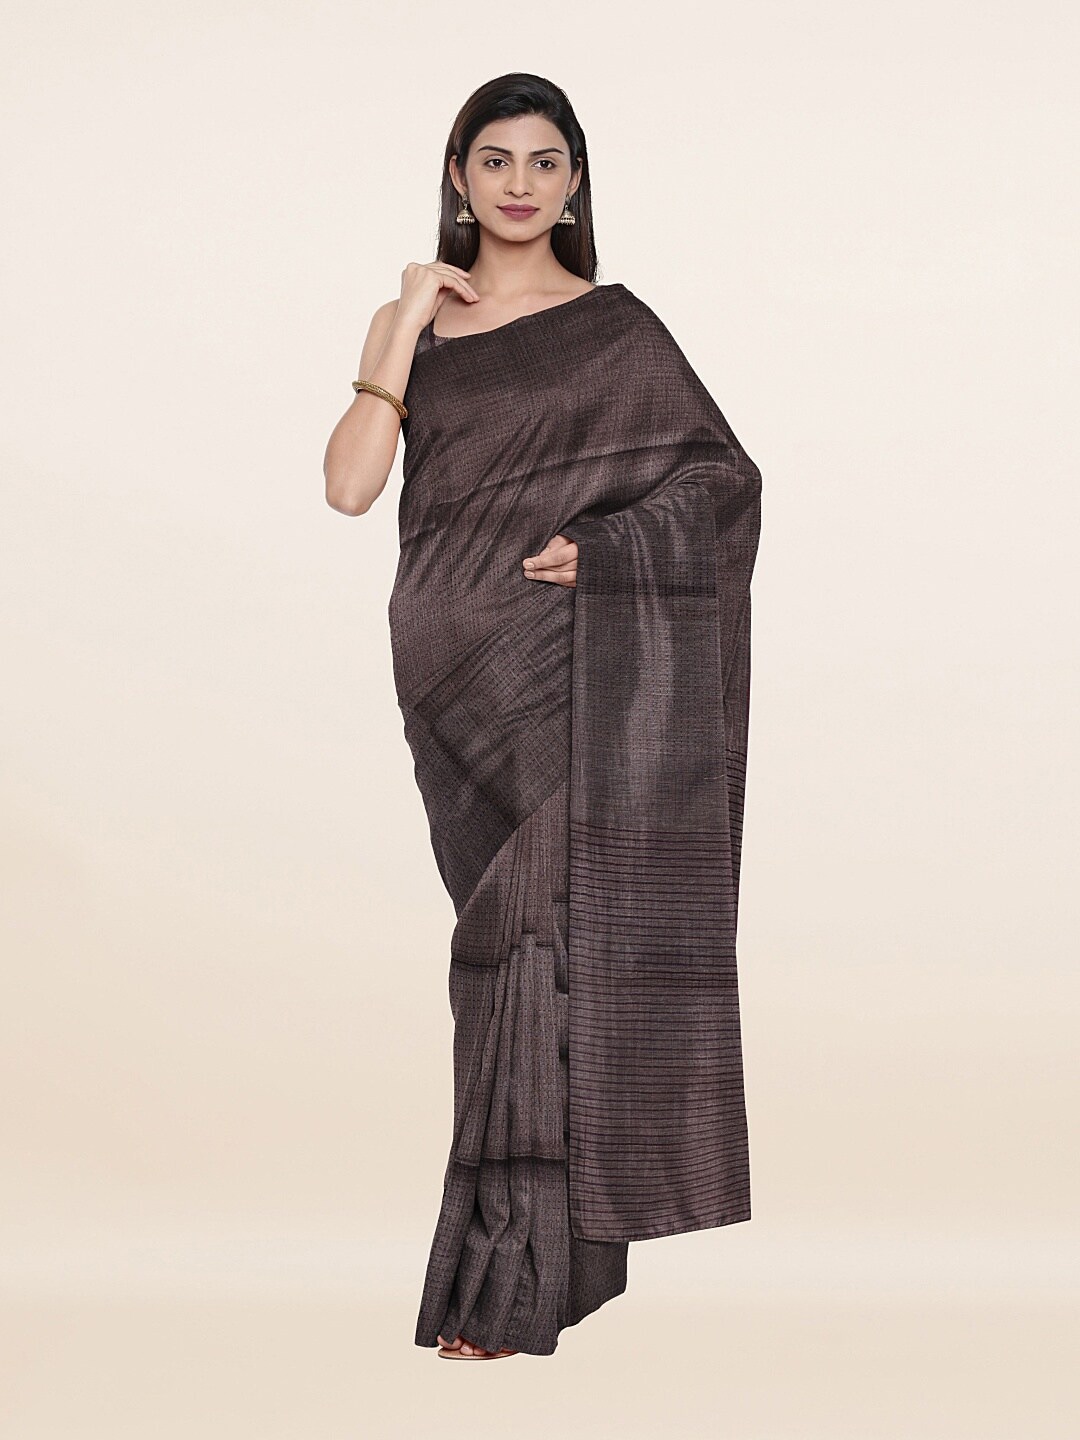 Pothys Brown Woven Design Art Silk Saree Price in India